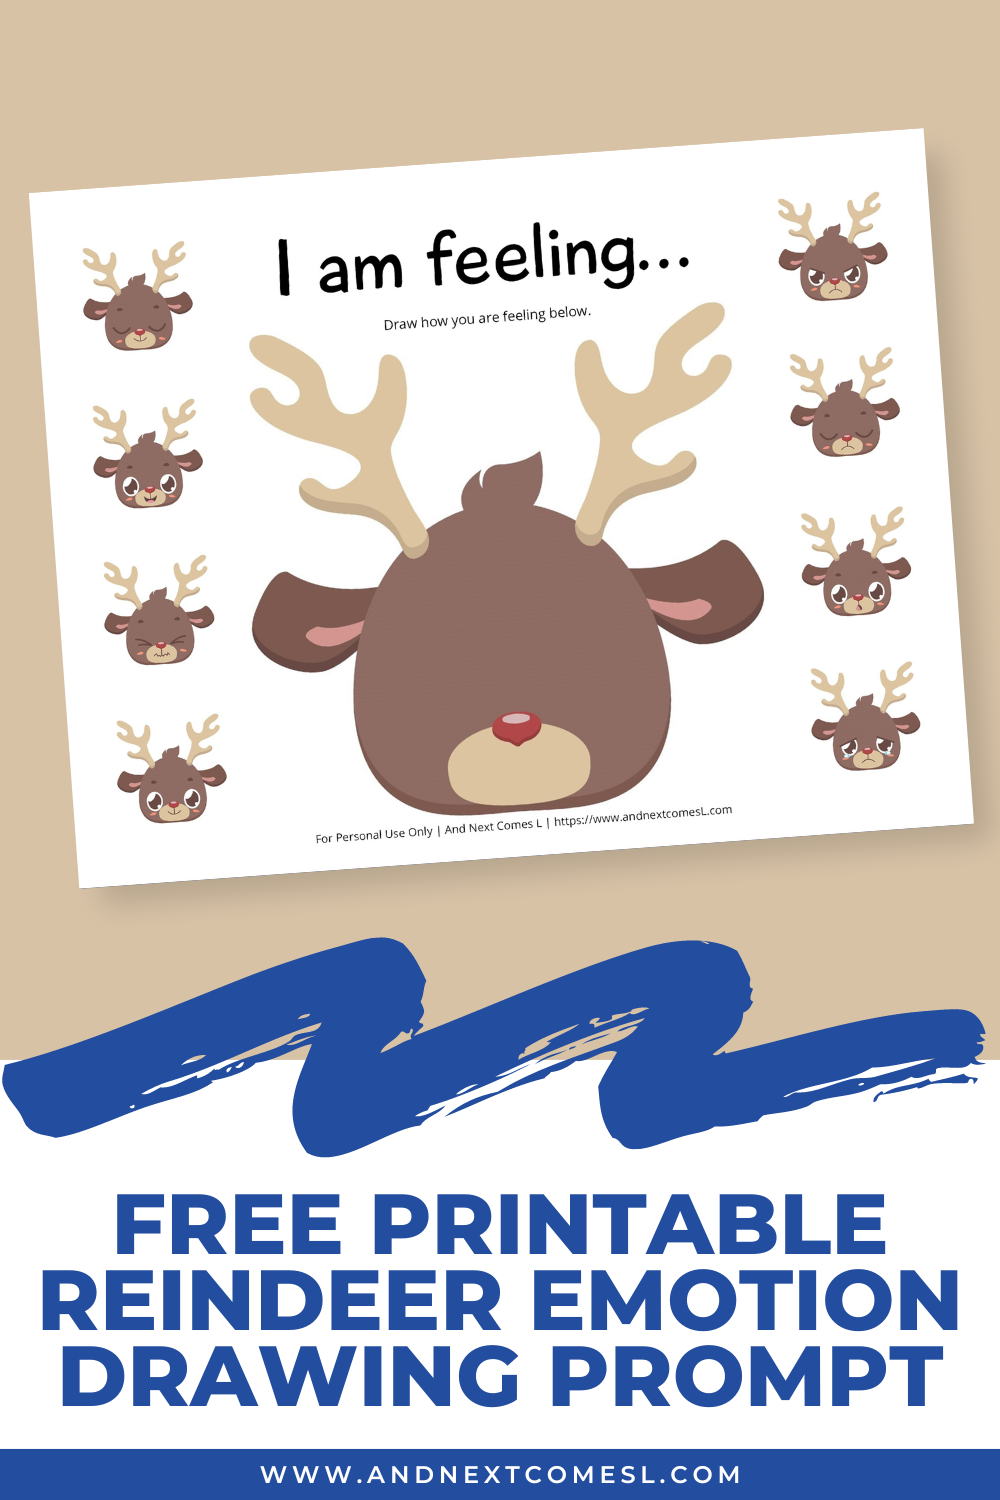 Free printable reindeer emotion drawing prompt for kids